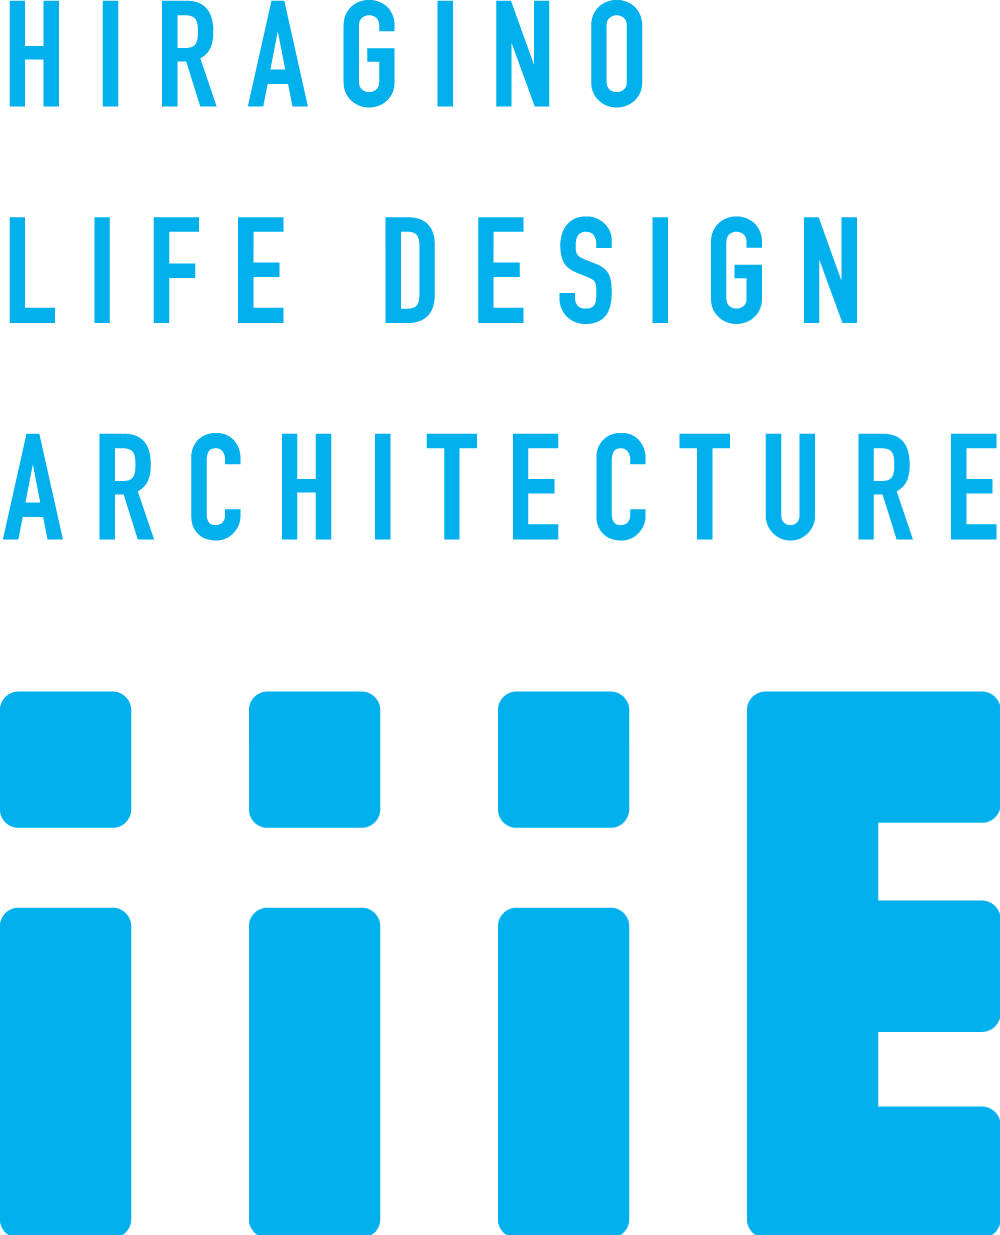 HIRAGINO LIFE DESIGN ARCHITECTURE